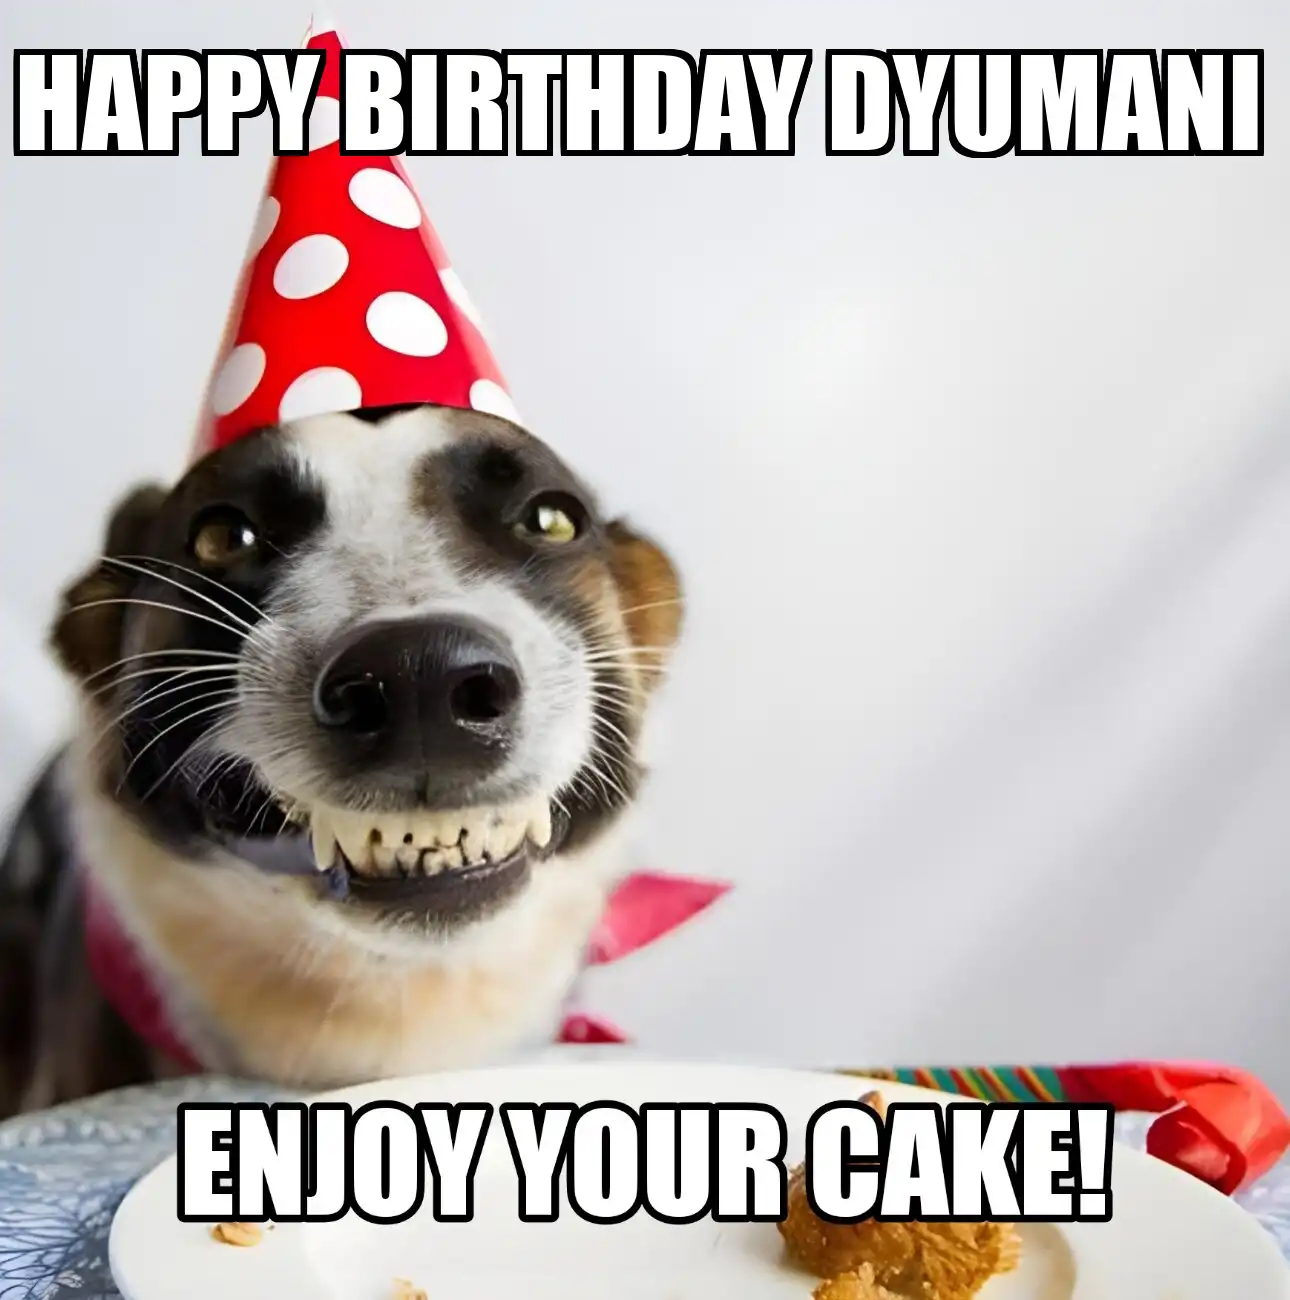 Happy Birthday Dyumani Enjoy Your Cake Dog Meme